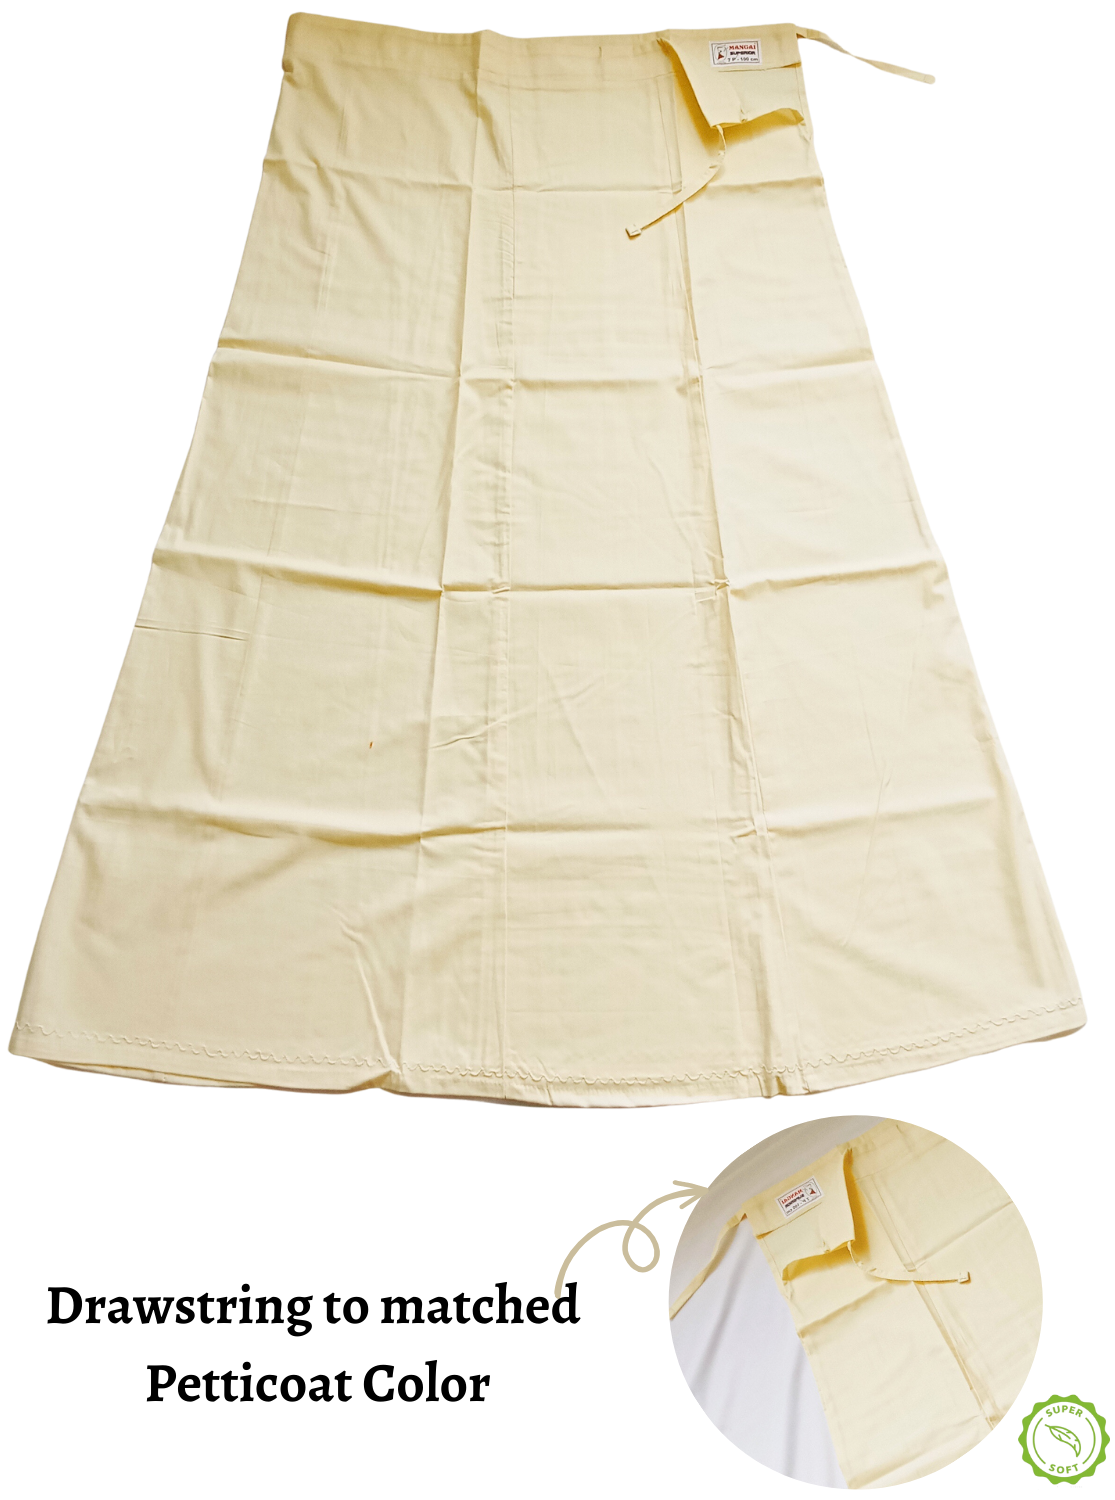 New Arrivals Premium MANGAI Embroidery Superior Cotton Petticoats - 7 PartSoft & Comfort Multicolor Petticoats